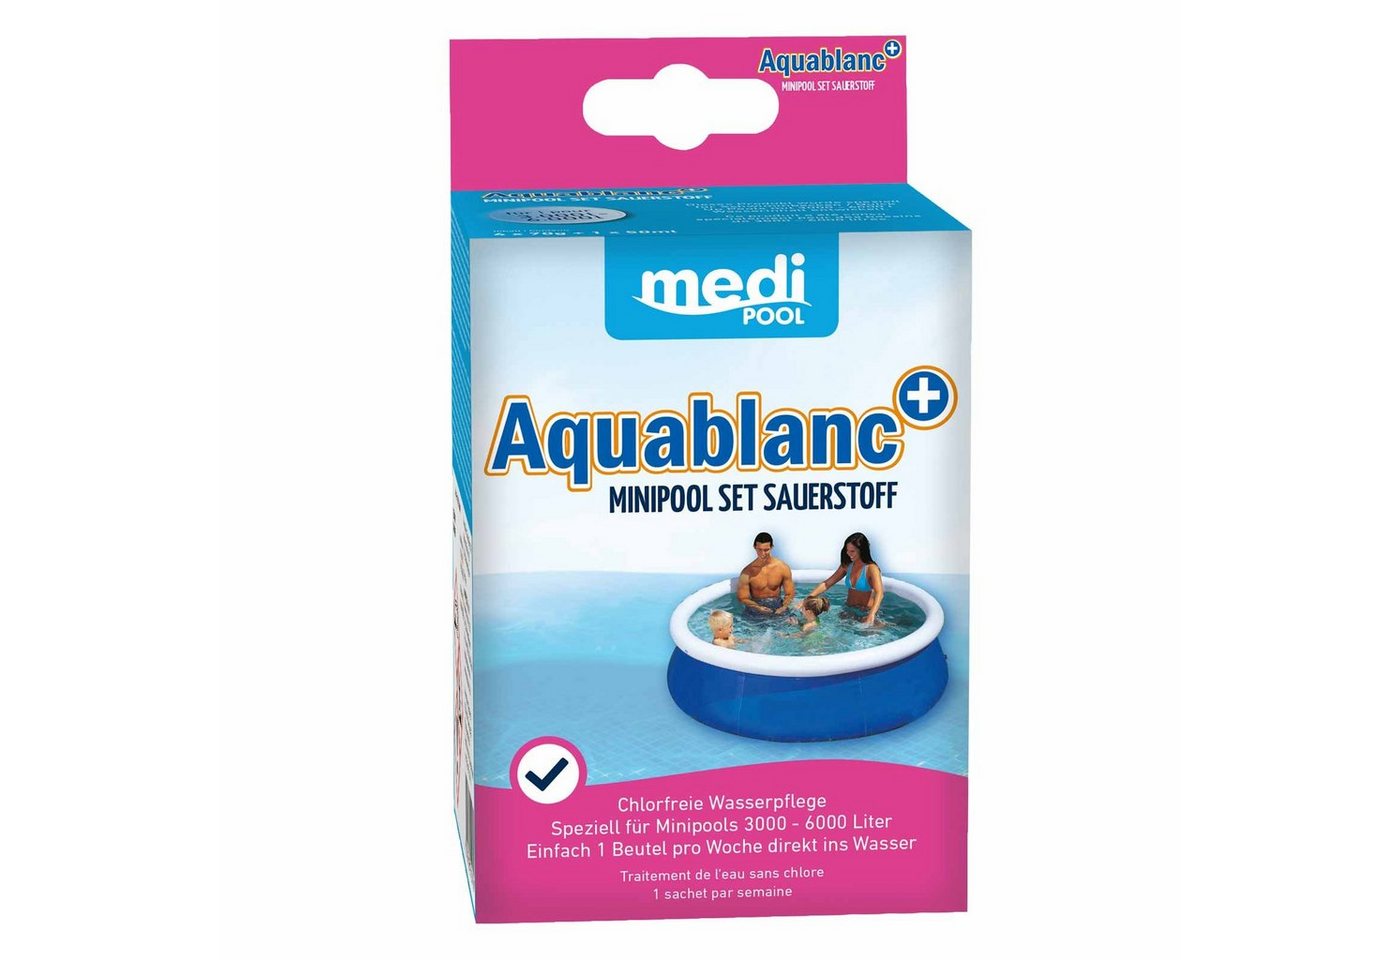 mediPOOL Poolpflege mediPOOL Aquablanc+ MiniPool Monats-Set Sauerstoff, chlorfrei, (Set) von mediPOOL